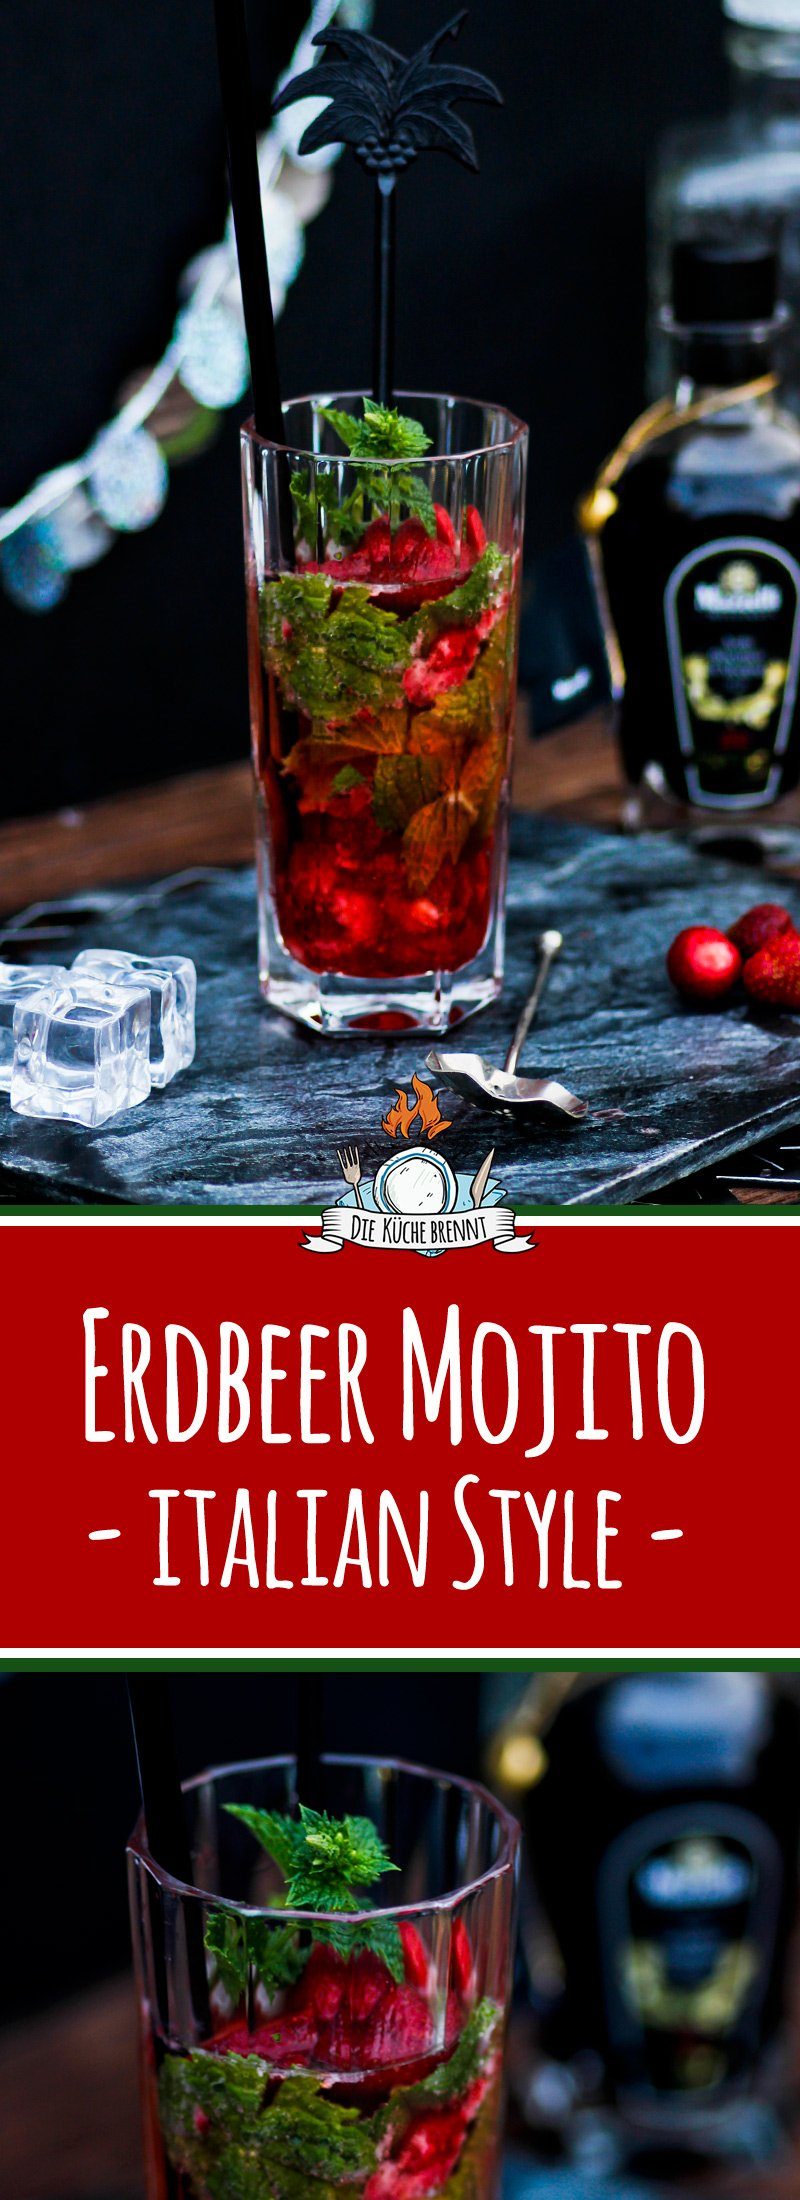 Sommercocktail - Erdbeer Mojito im Italian Style mit Mazzetti l’originale